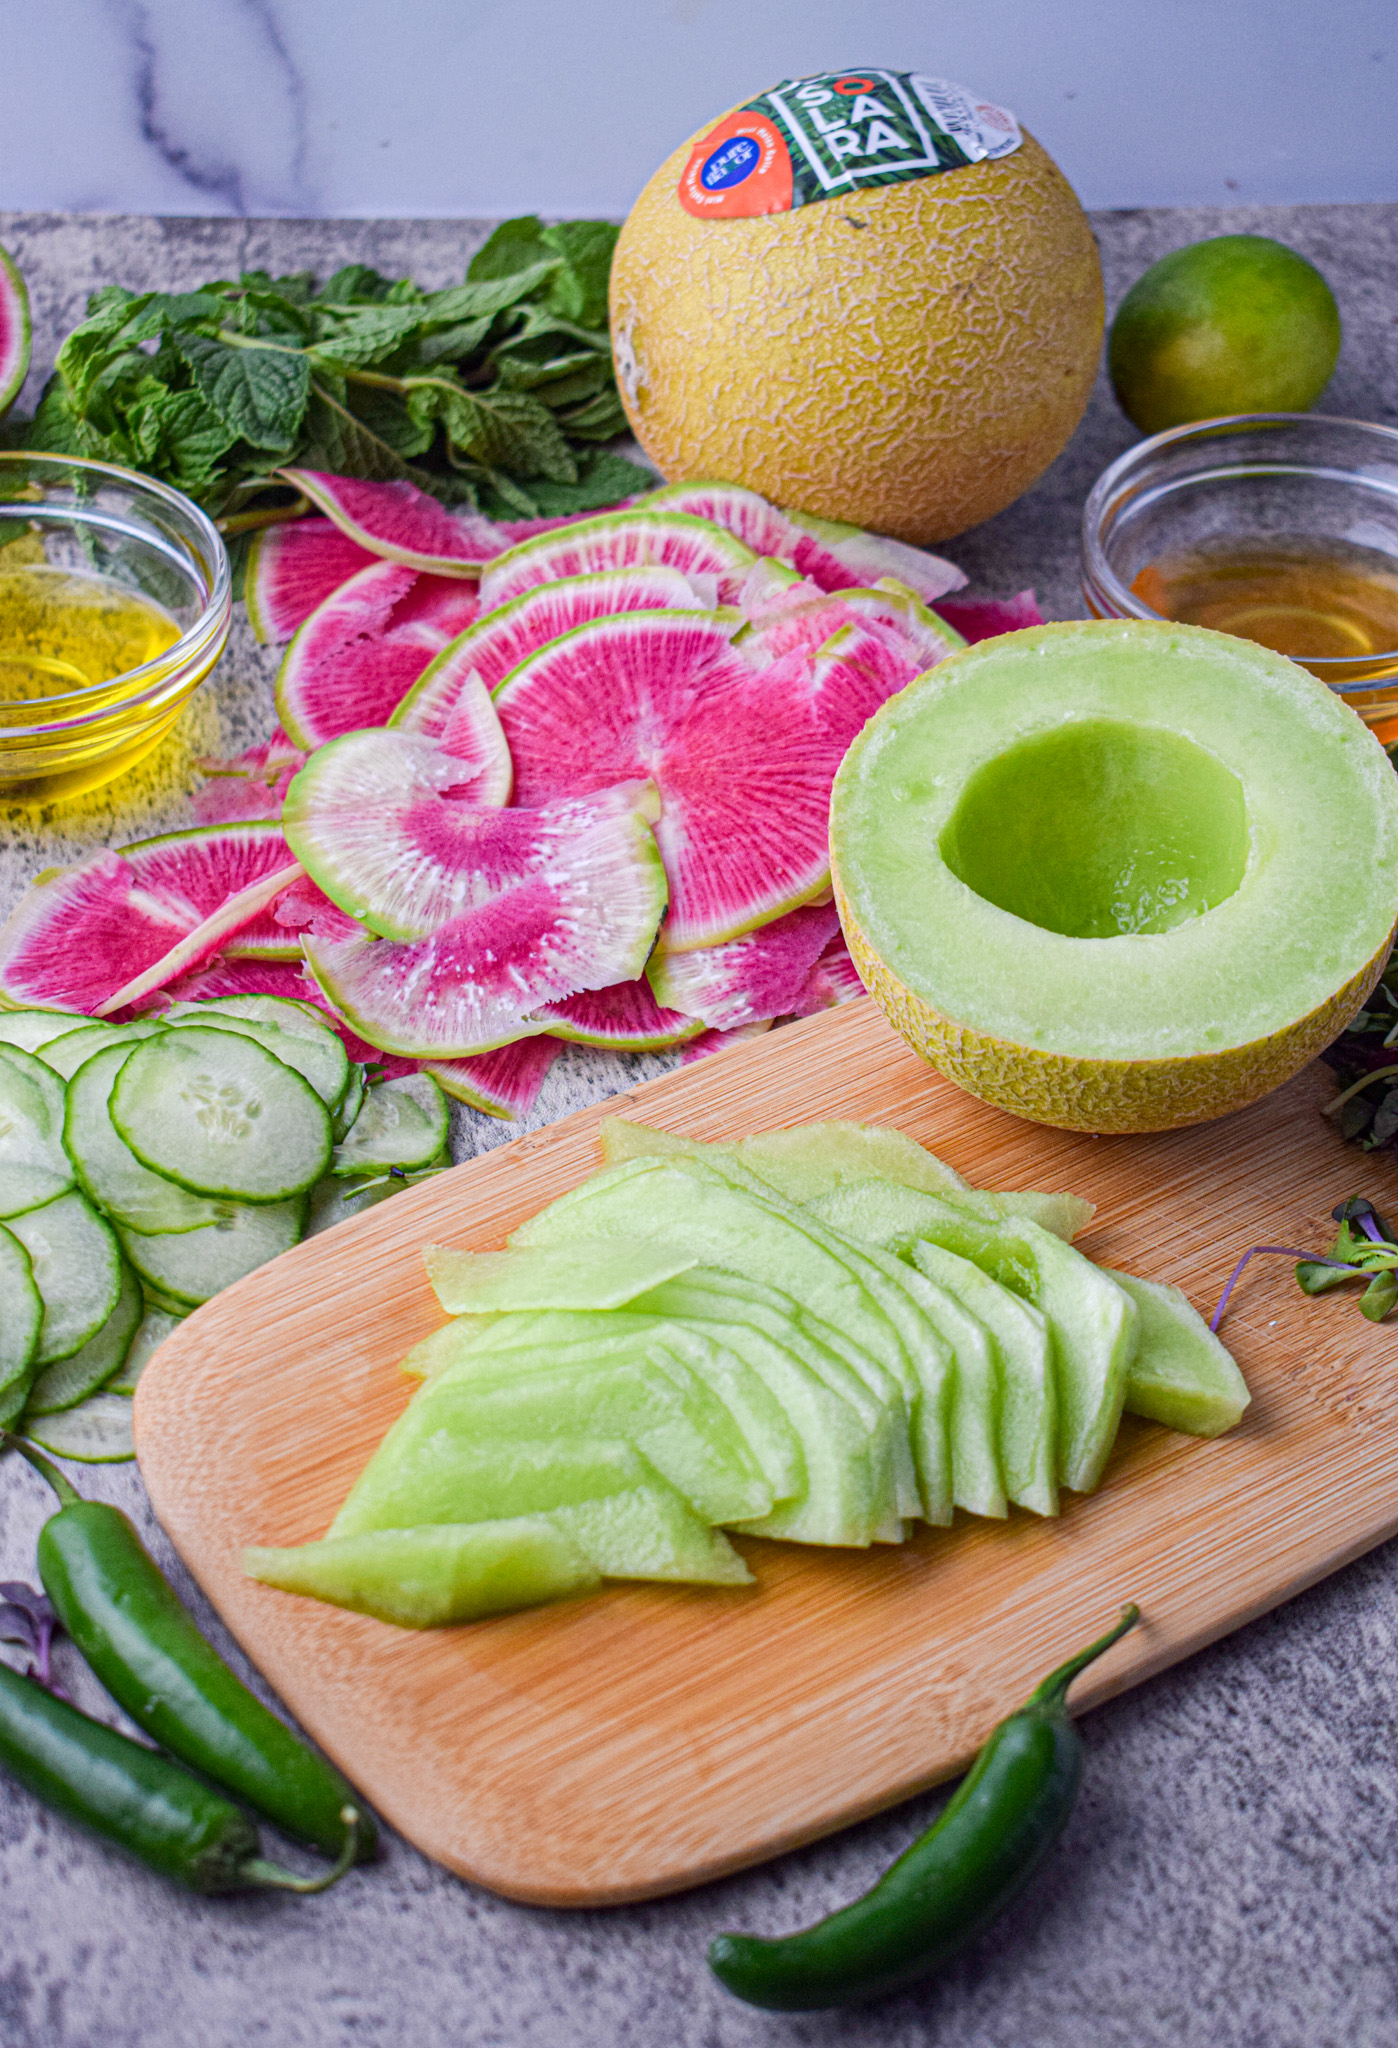 sliced solara green melon, cucumber and watermelon radish for a summer salad recipe